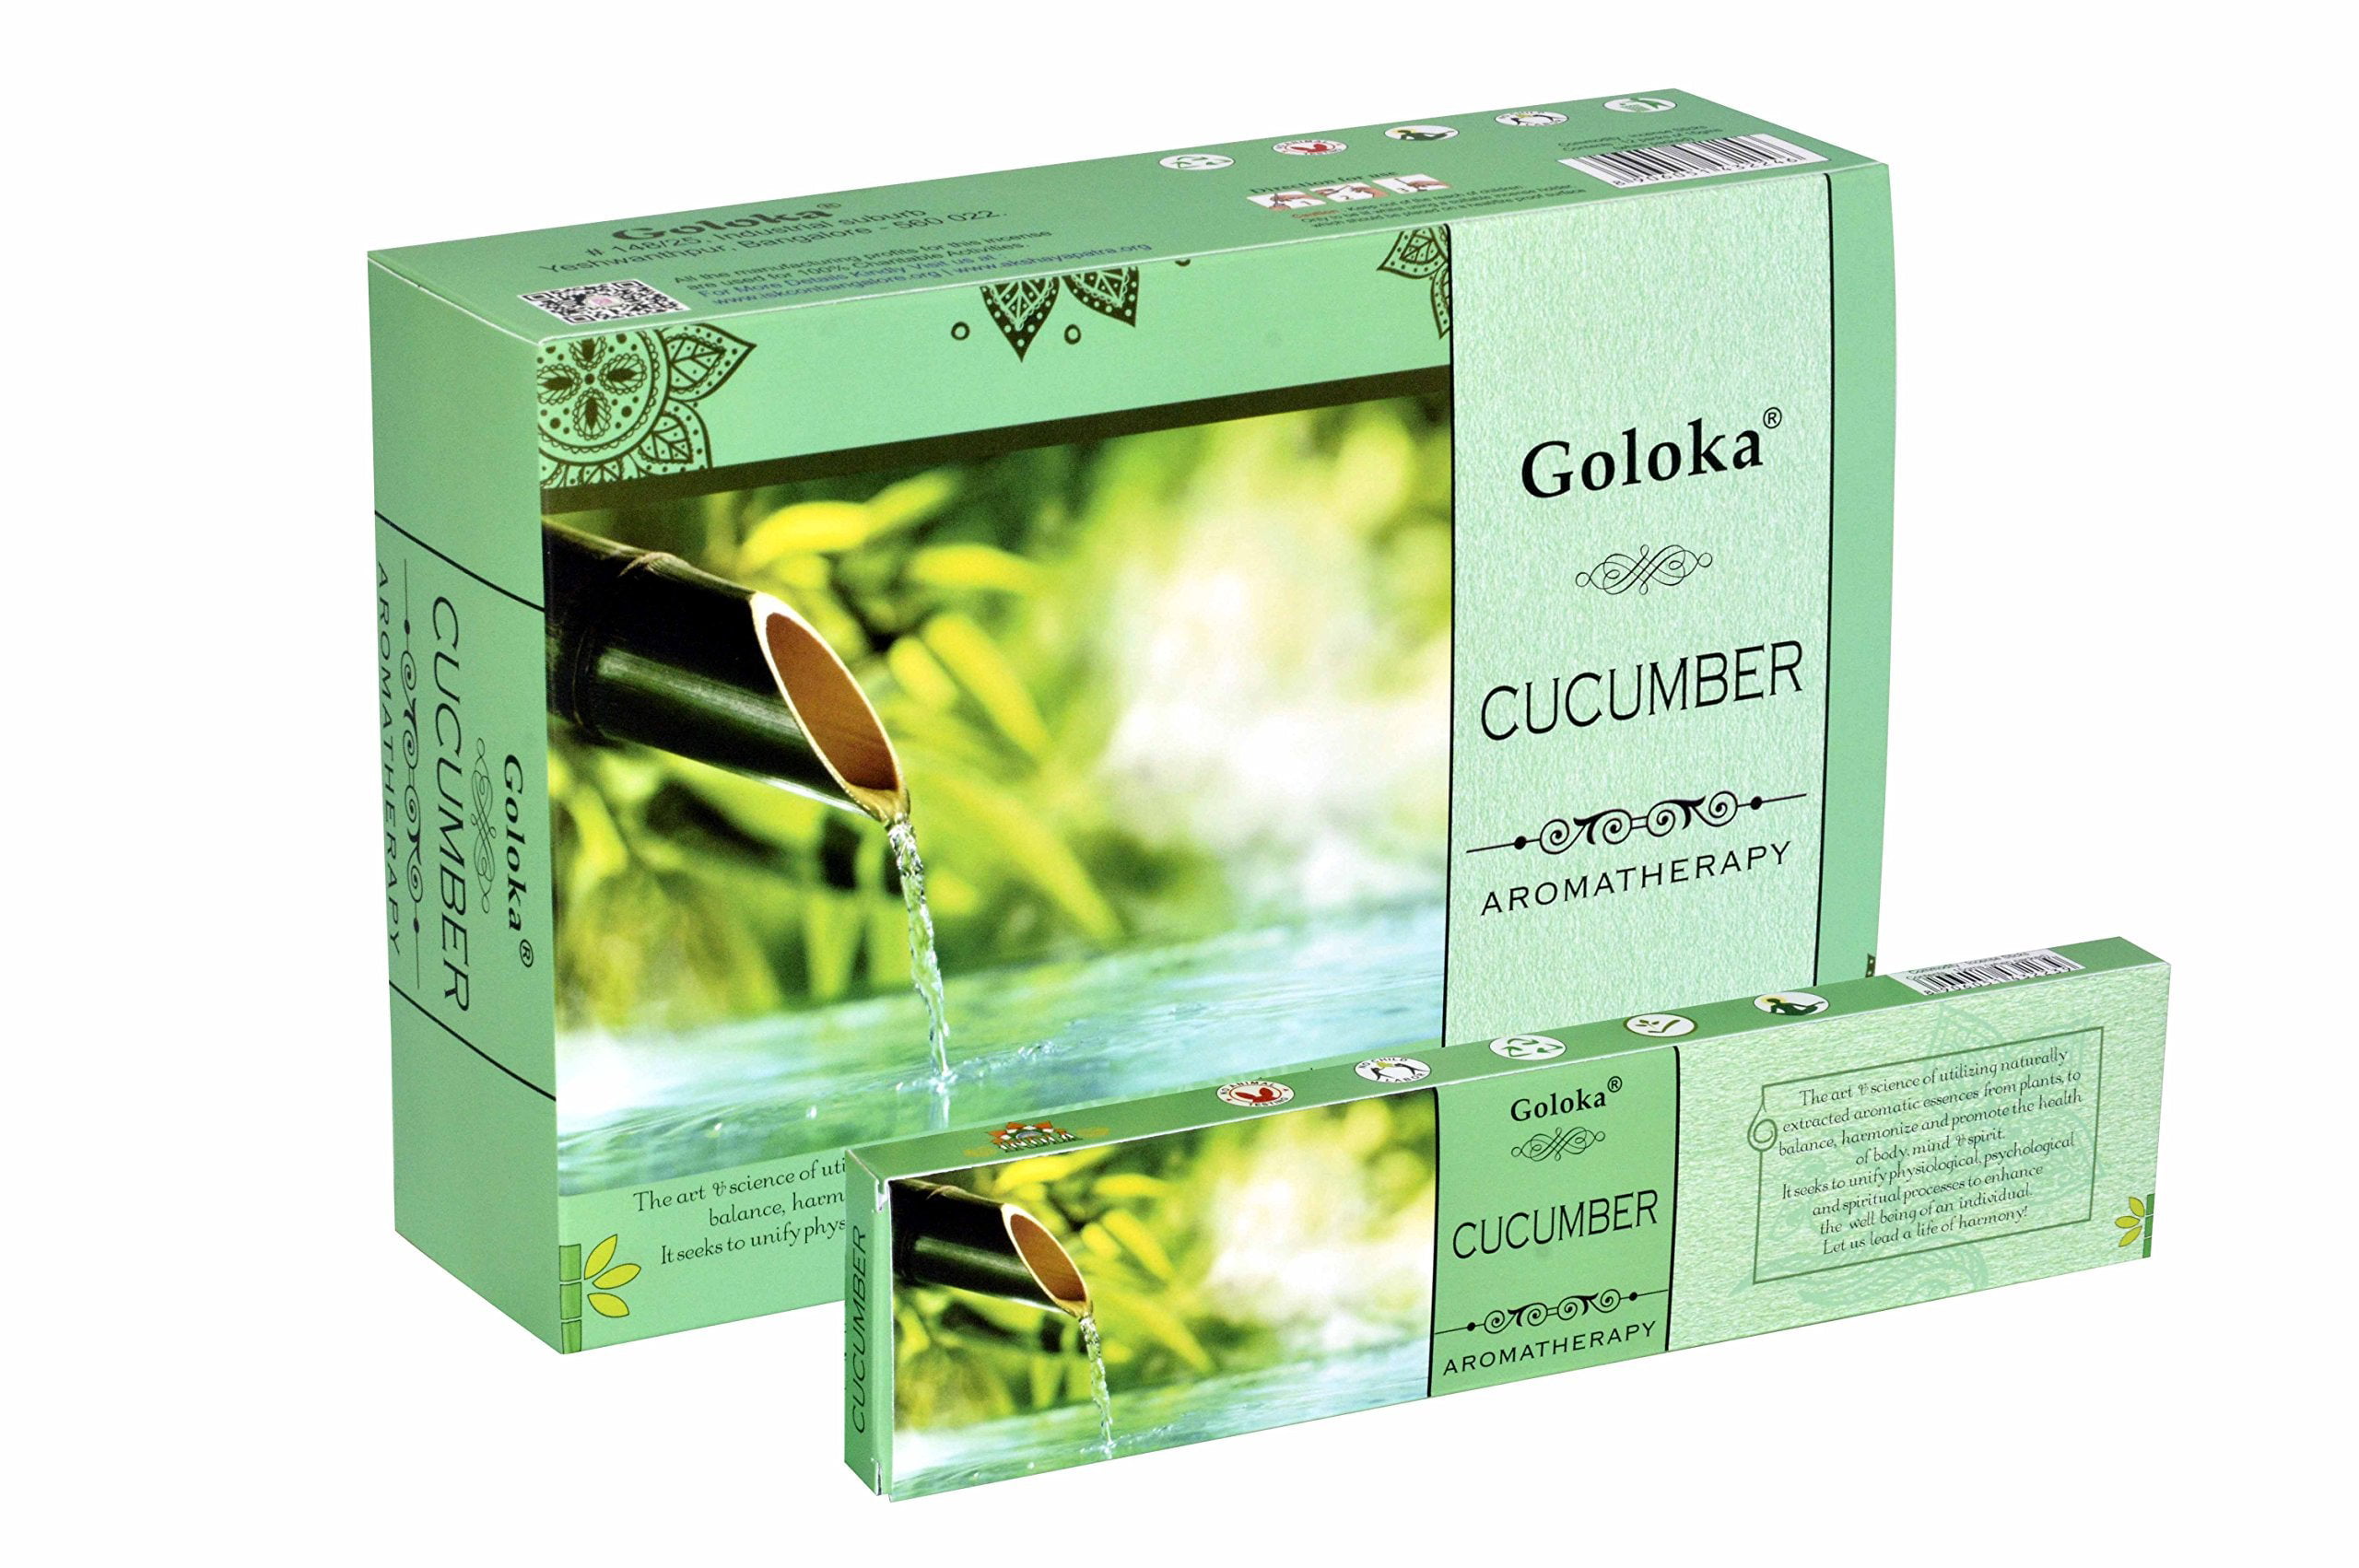 6 boxes of 15 gms Goloka Astagandha Organika collection incense sticks Total 9 